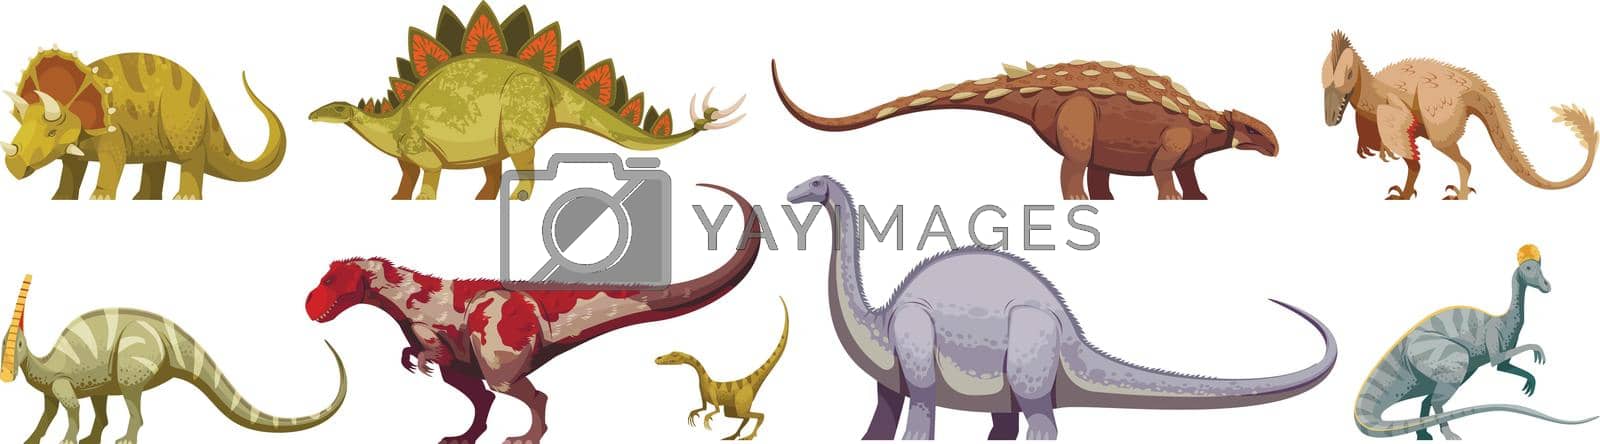 Royalty free image of Dinosaurs Cartoon Set by mstjahanara